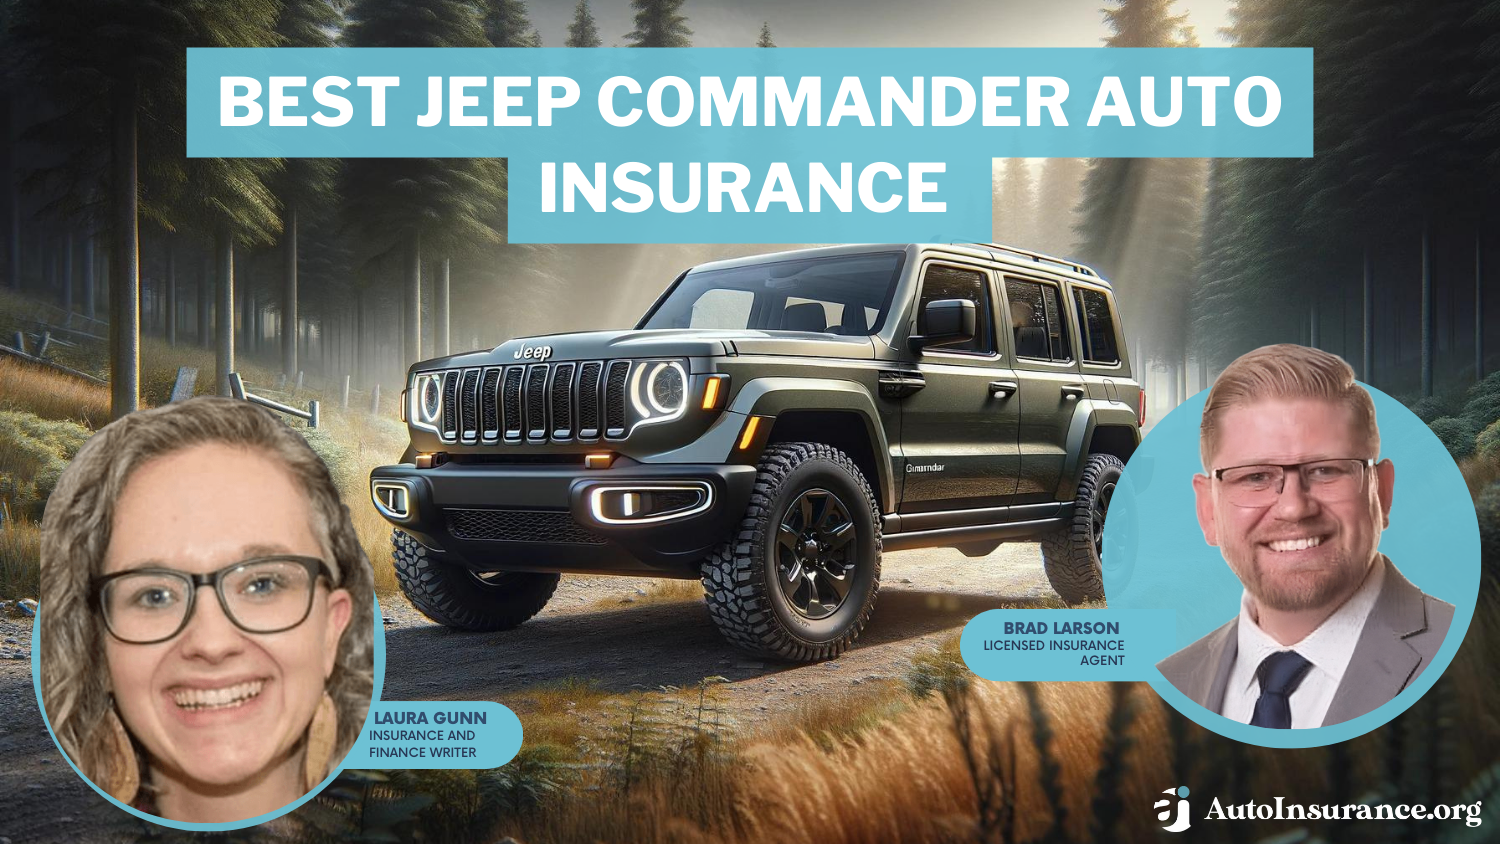 Best Jeep Commander Auto Insurance: State Farm, Geico, USAA